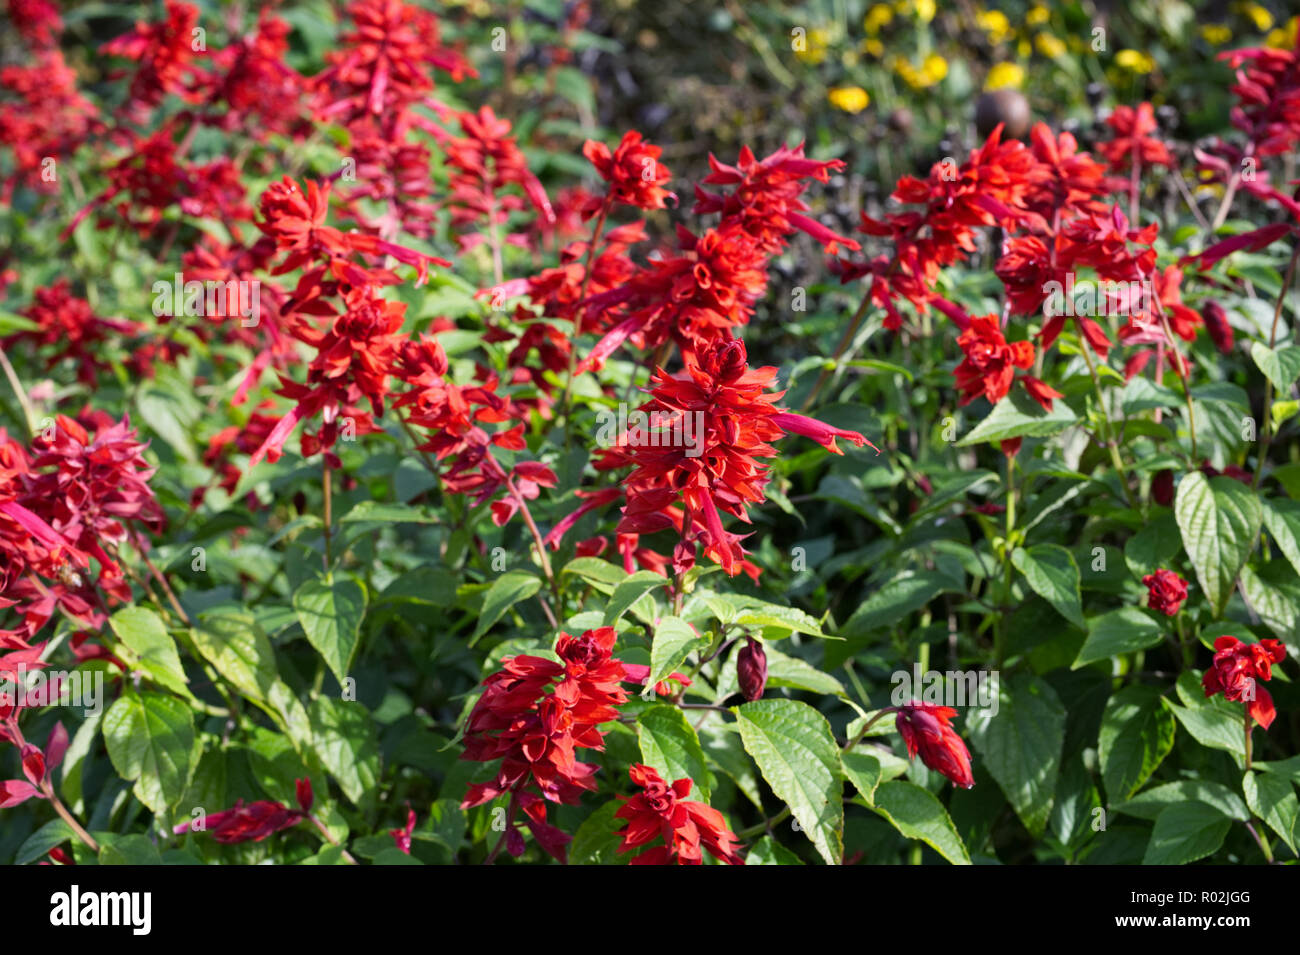 Salvia splendens 'Jimi's Good Red' flowers. Stock Photo